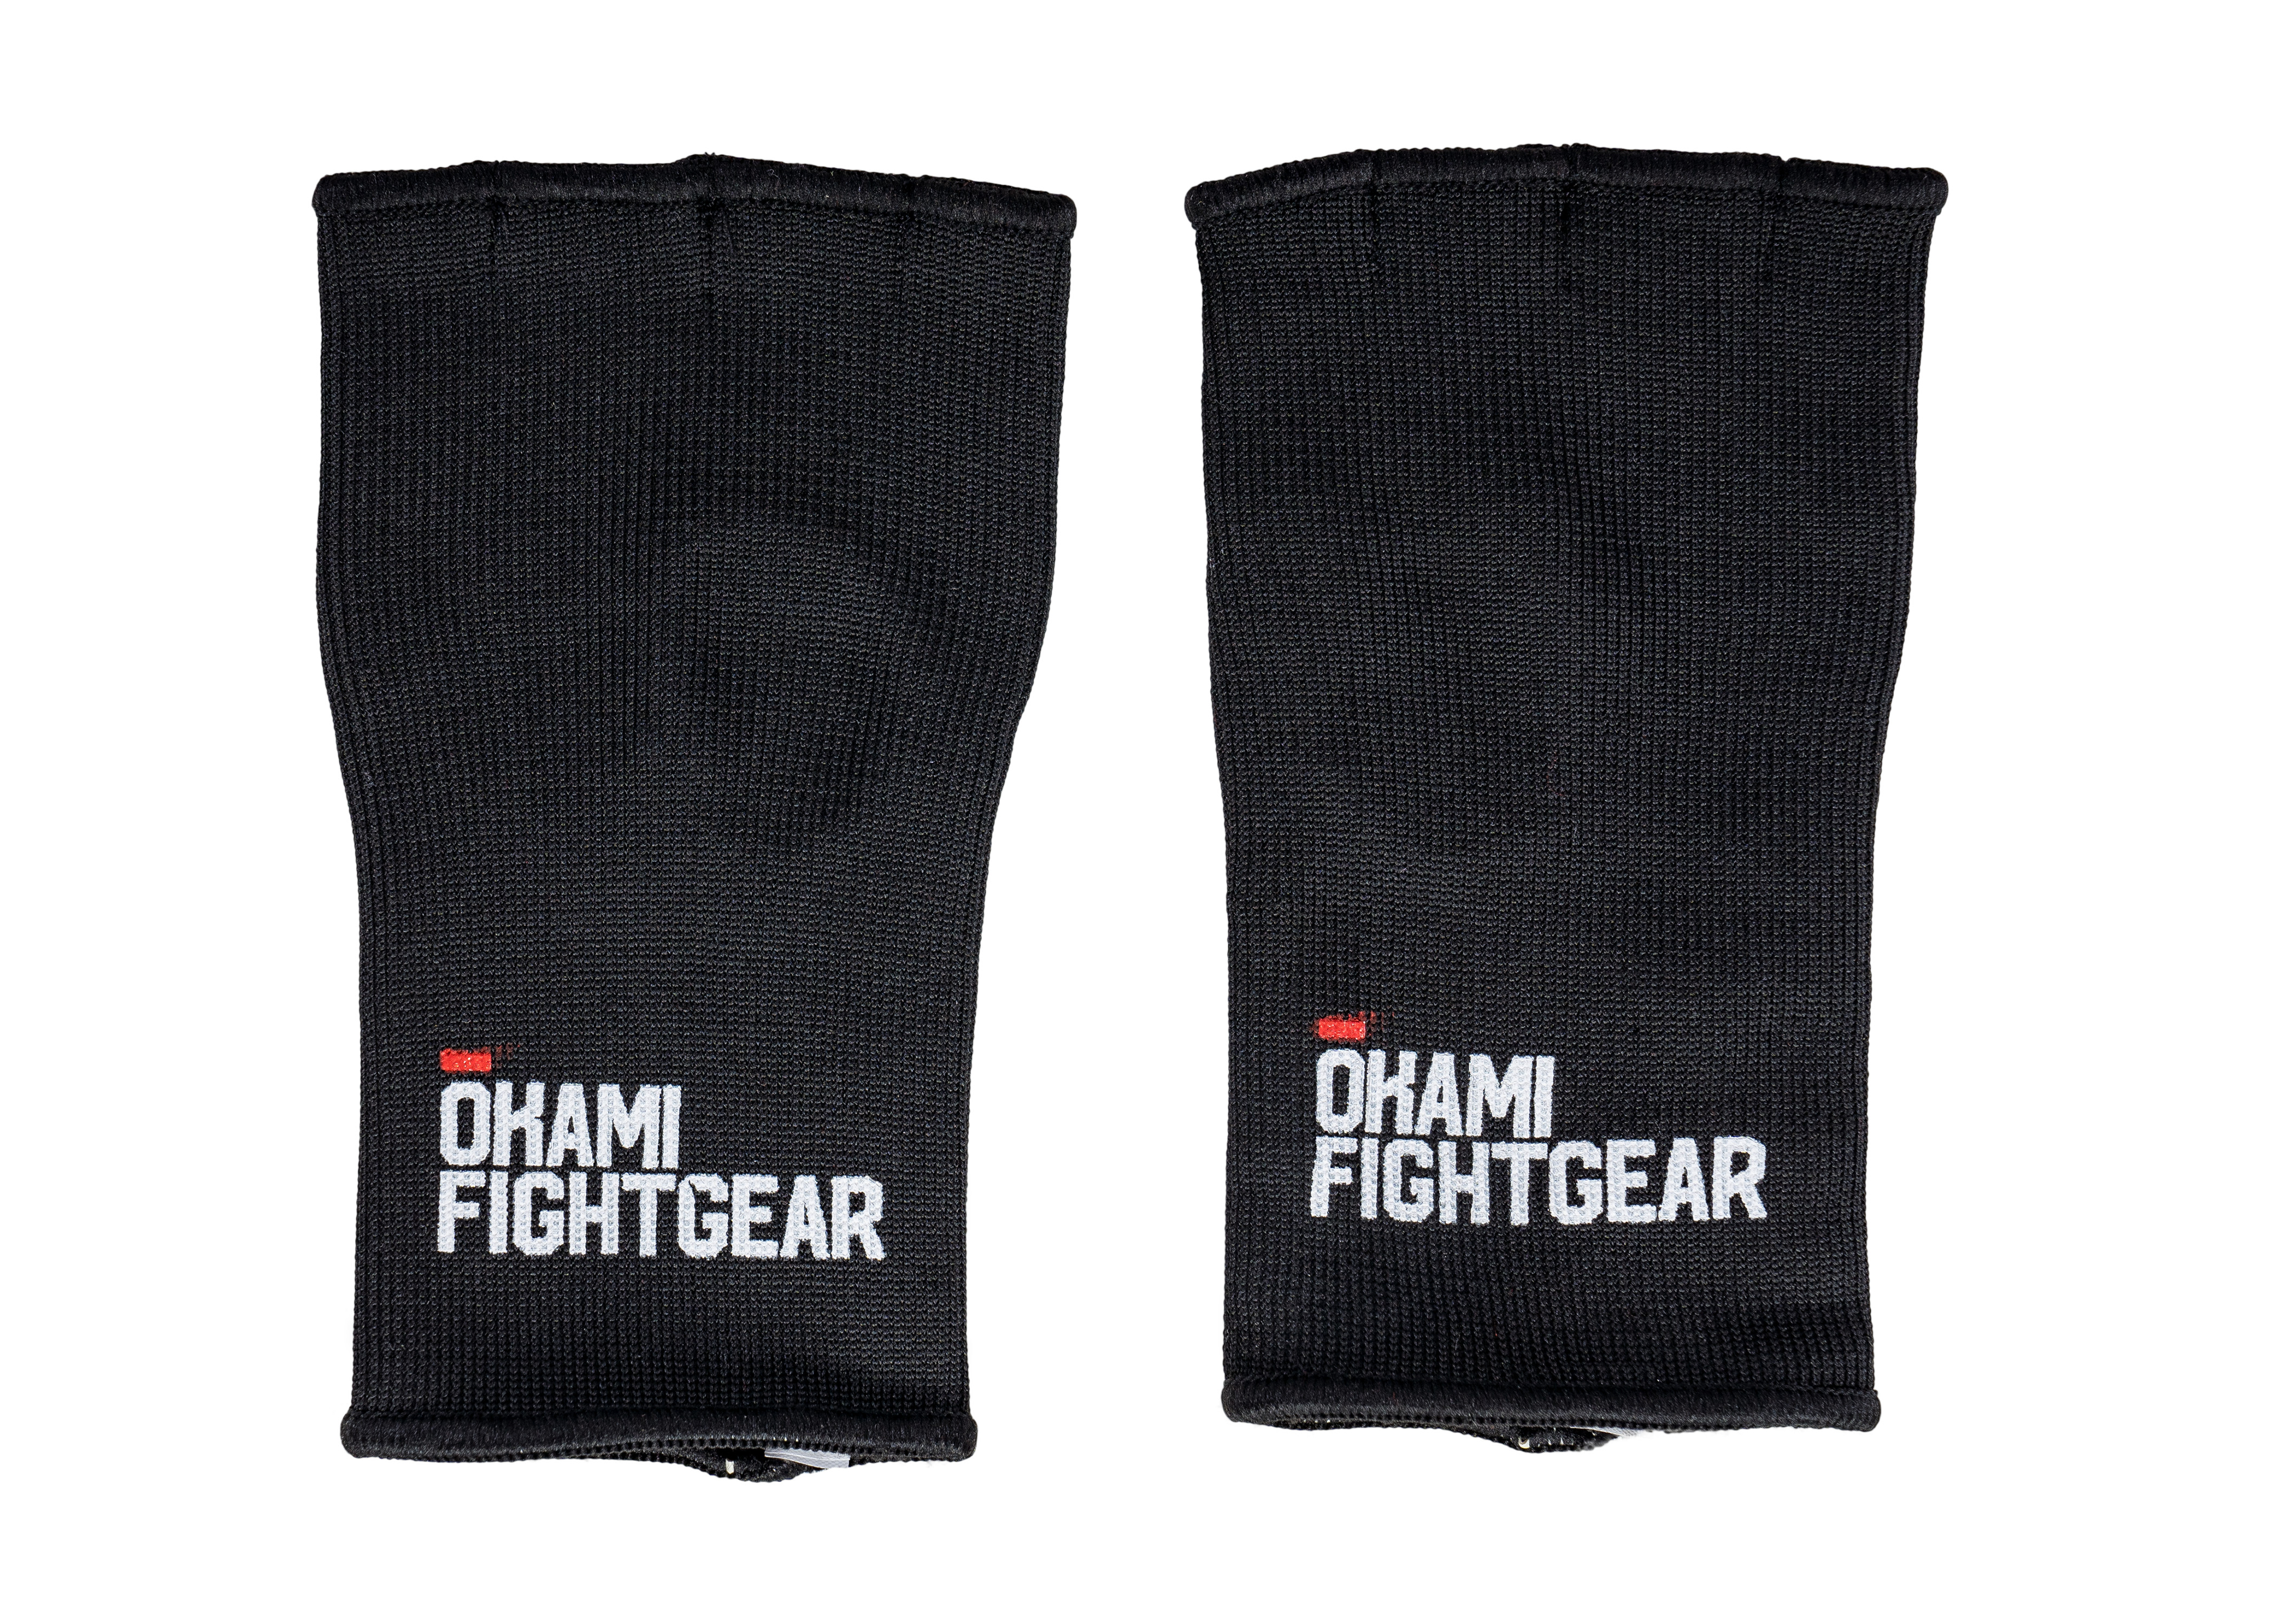 Okami Fightgear Unterhandschuh  (Größe XL)  (Paar)